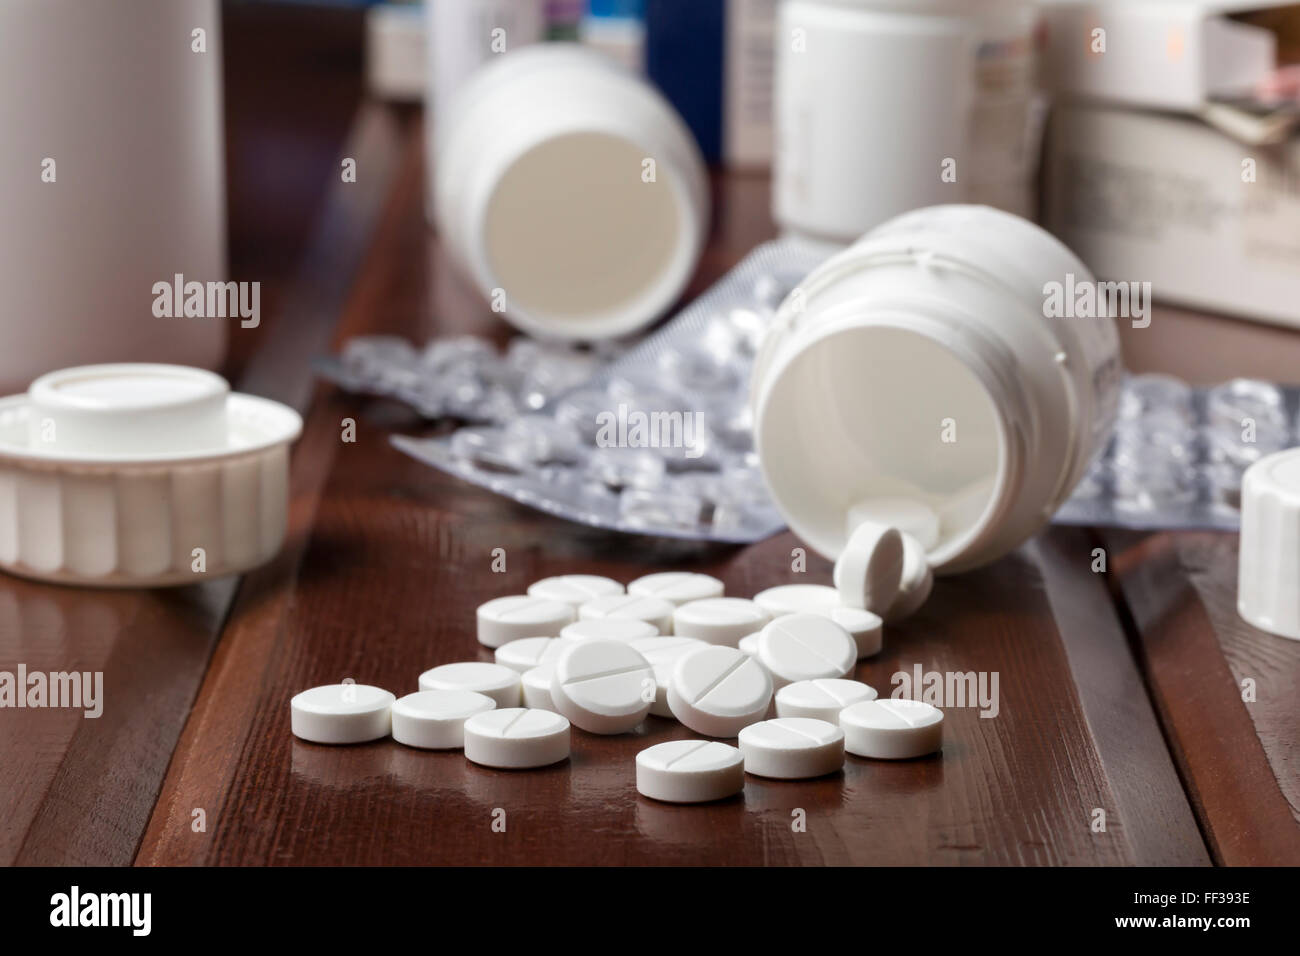 White pills and empty pill bottles Stock Photo